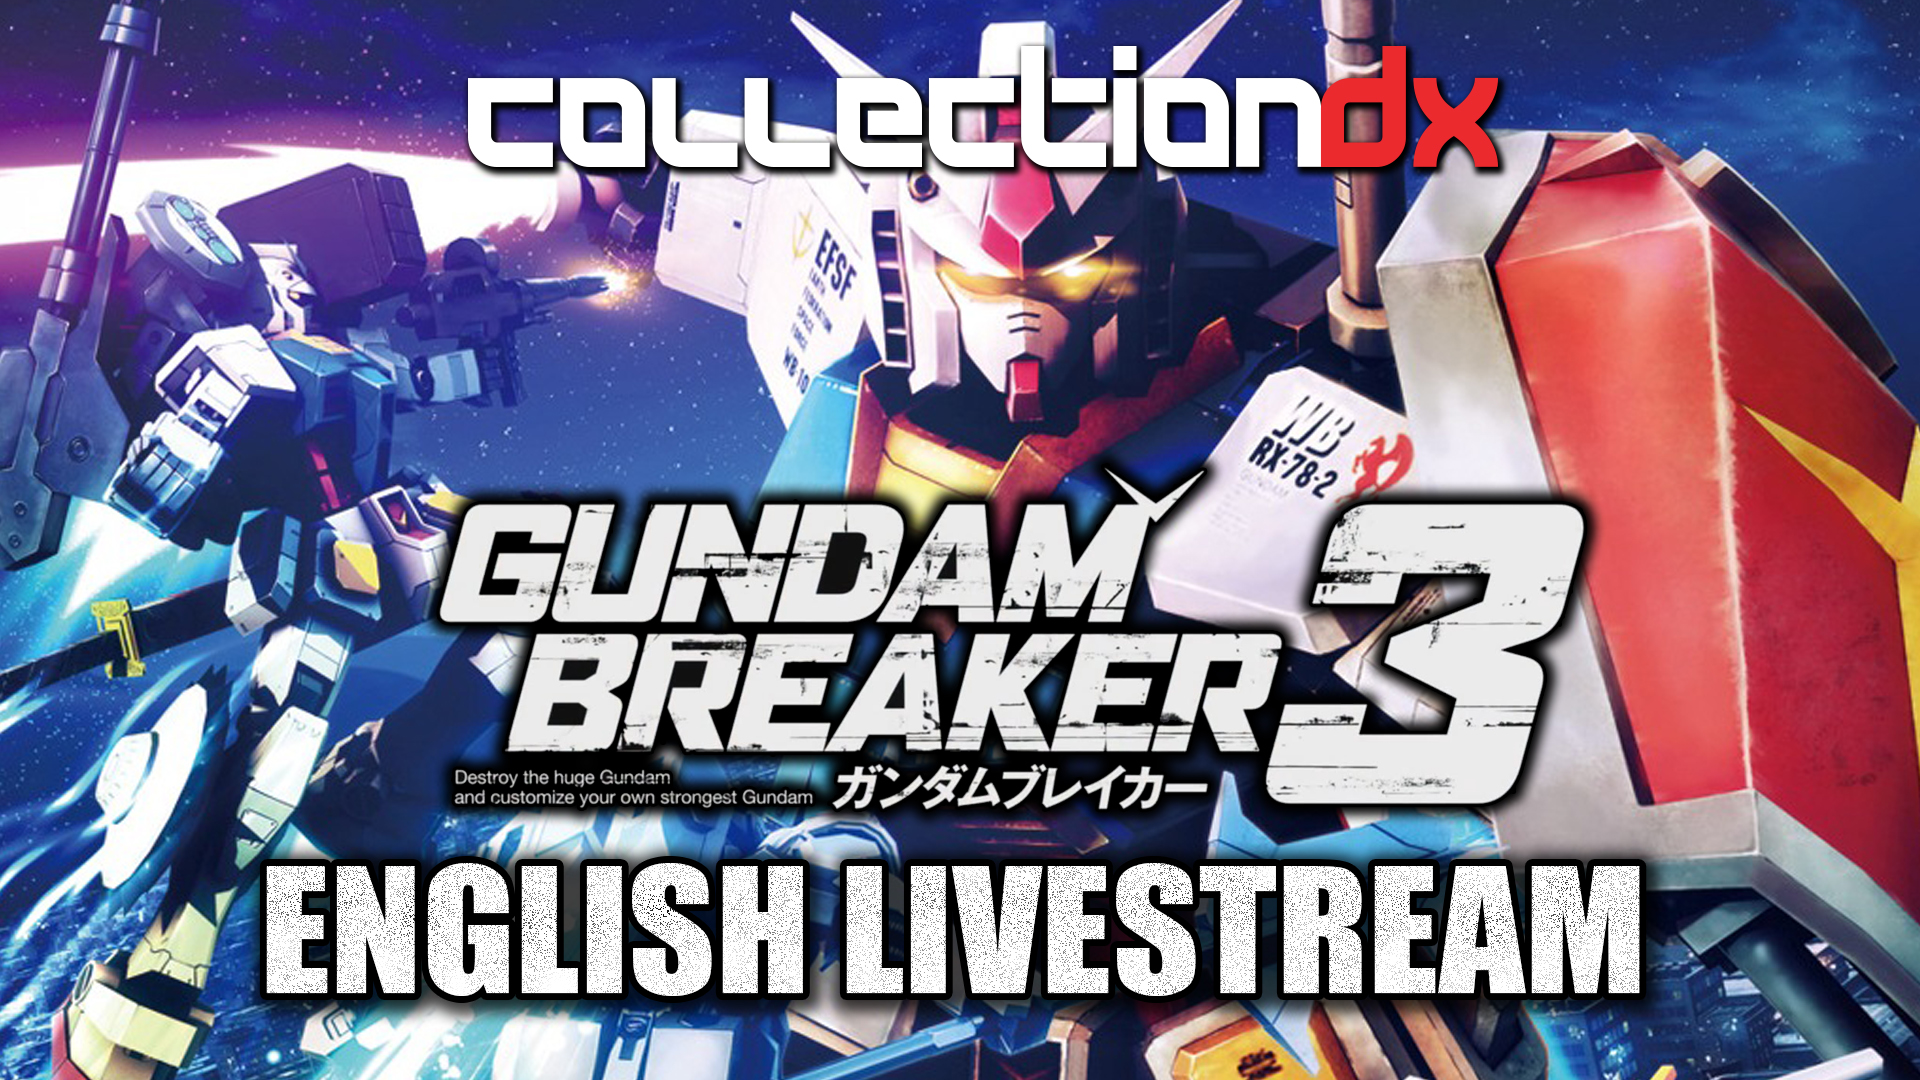 CollectionDX Gundam Breaker 3 English Livestream